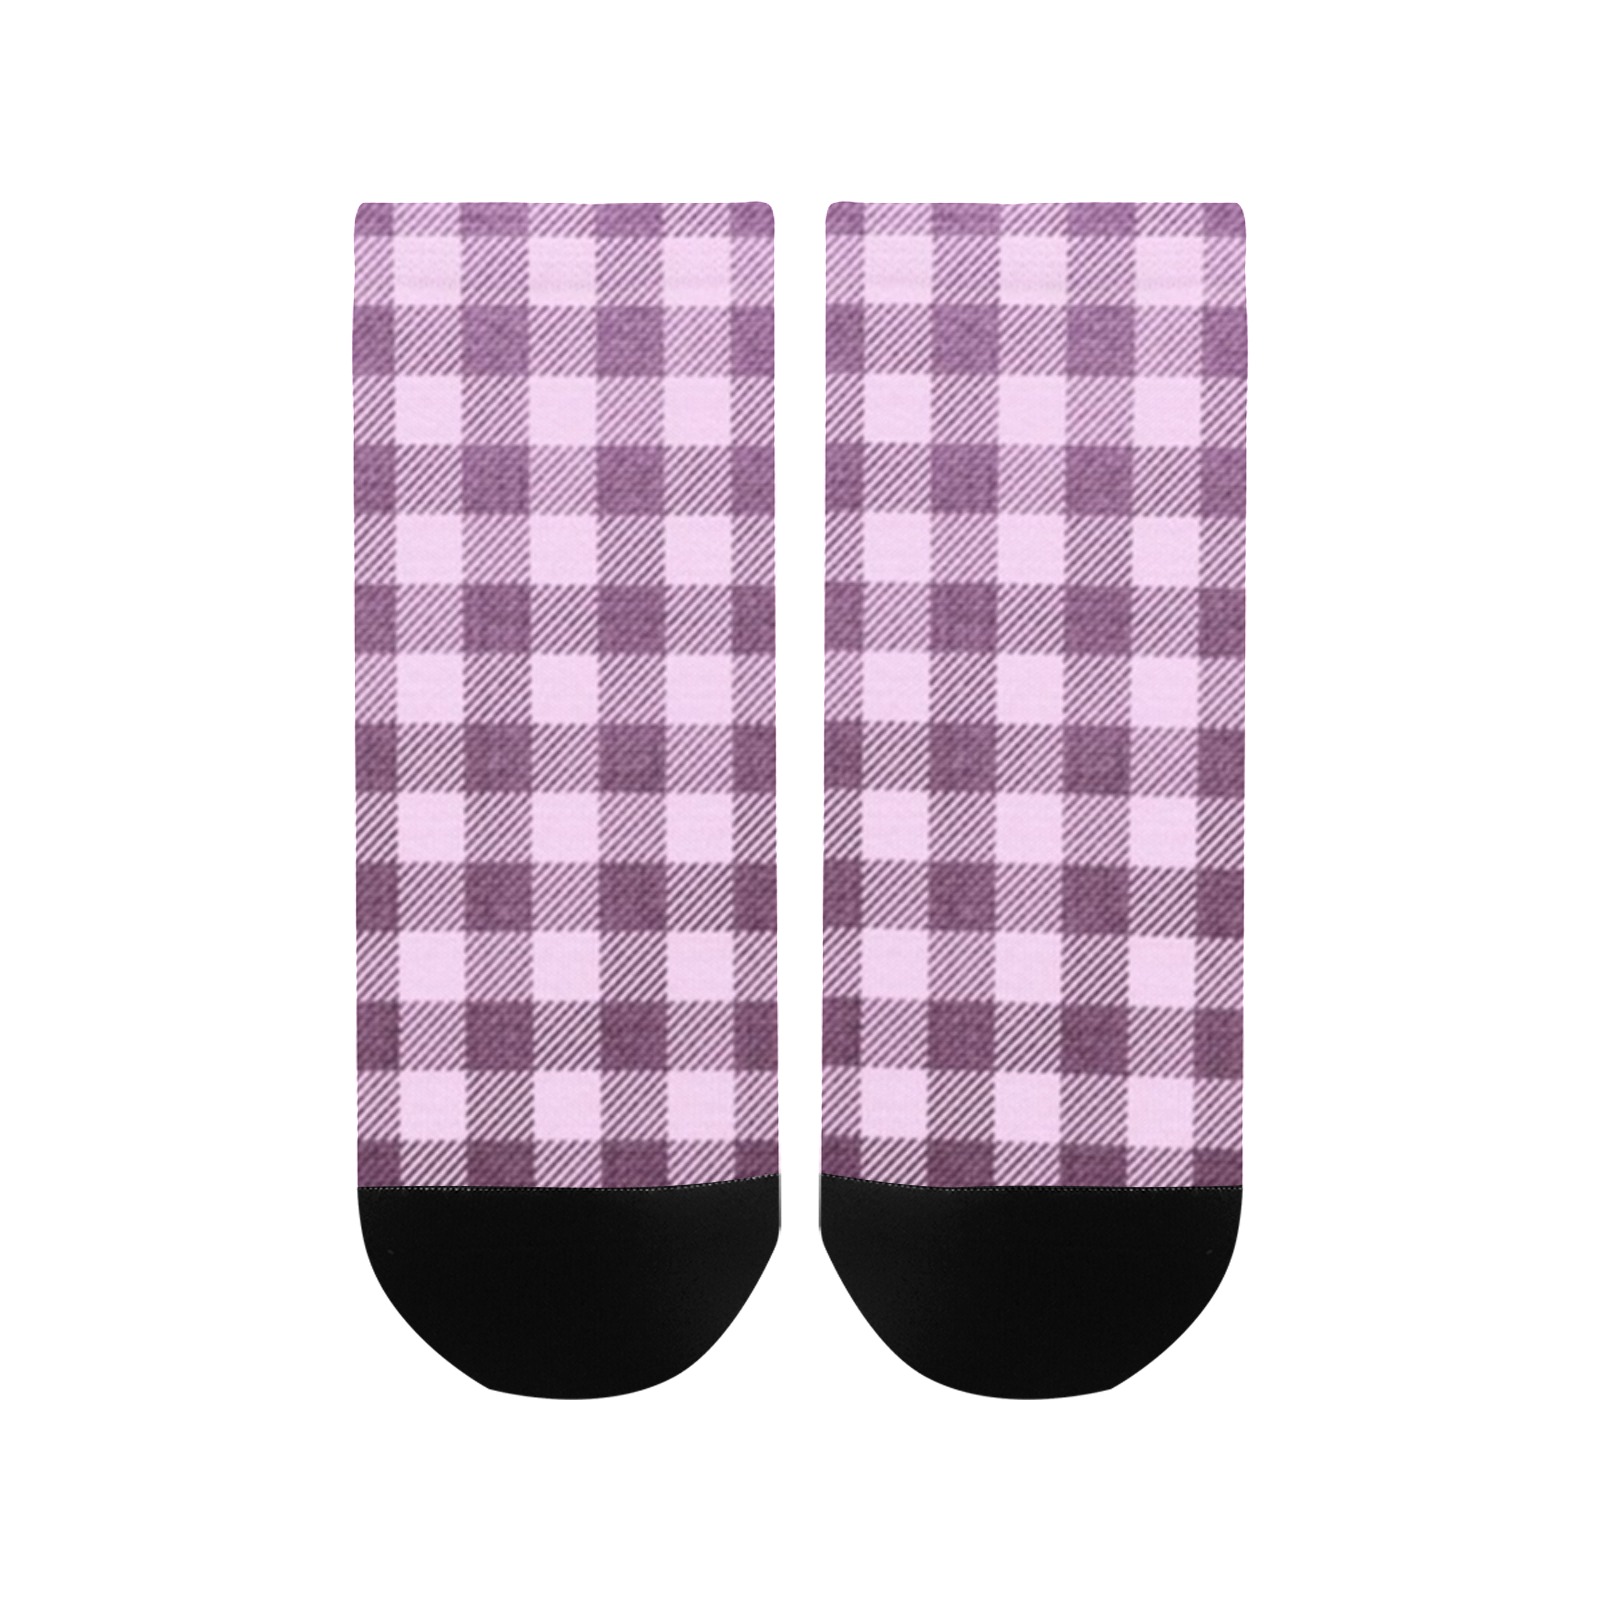 Pastel Rose Plaid Women's Ankle Socks